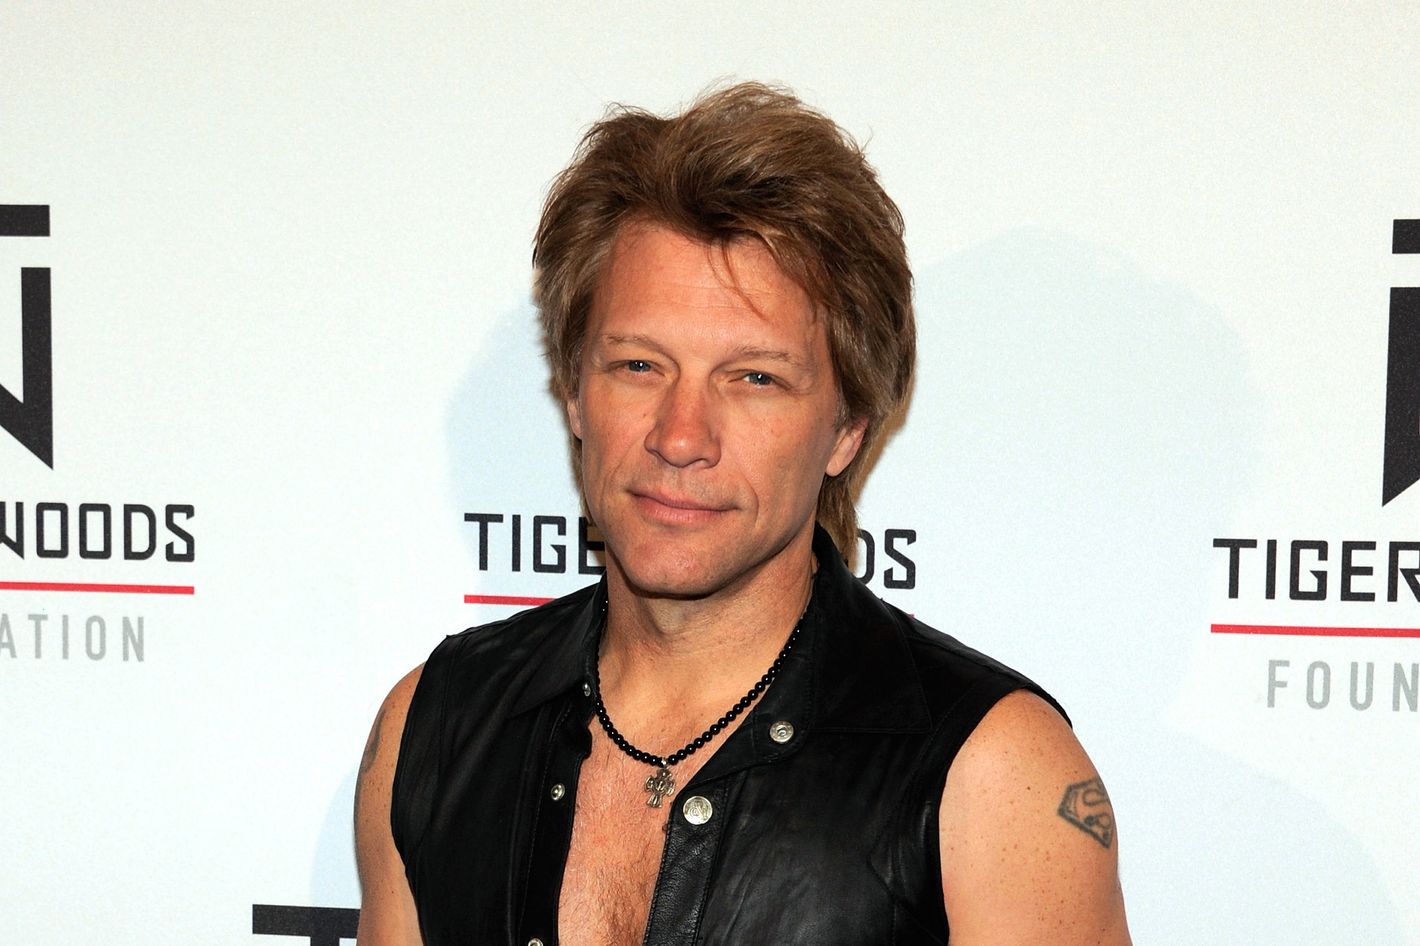 Bon Jovi - One Wild Night - YouTube